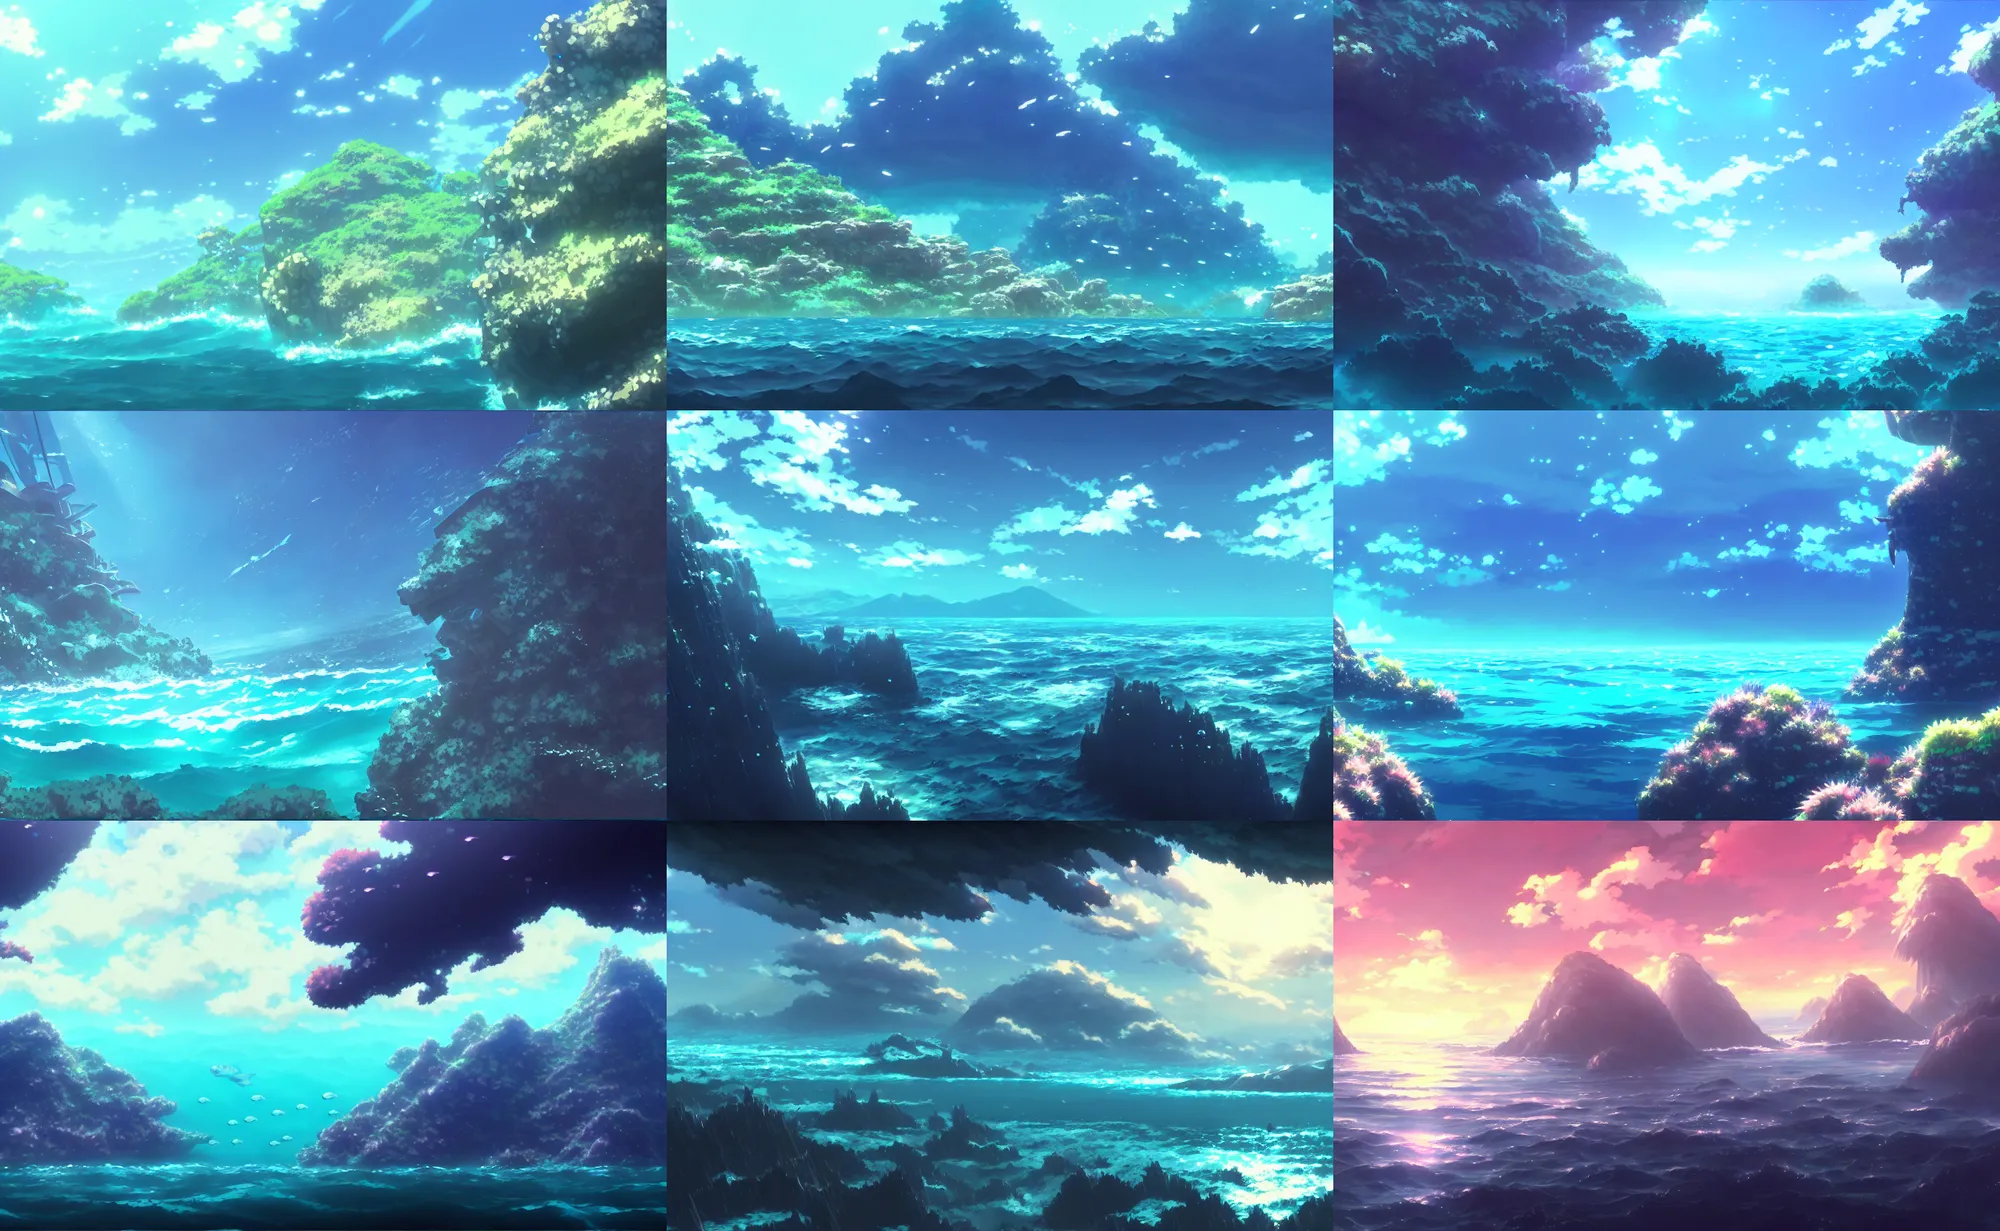 Anime Style Sea - Ocean Shore [Tutorial] - YouTube